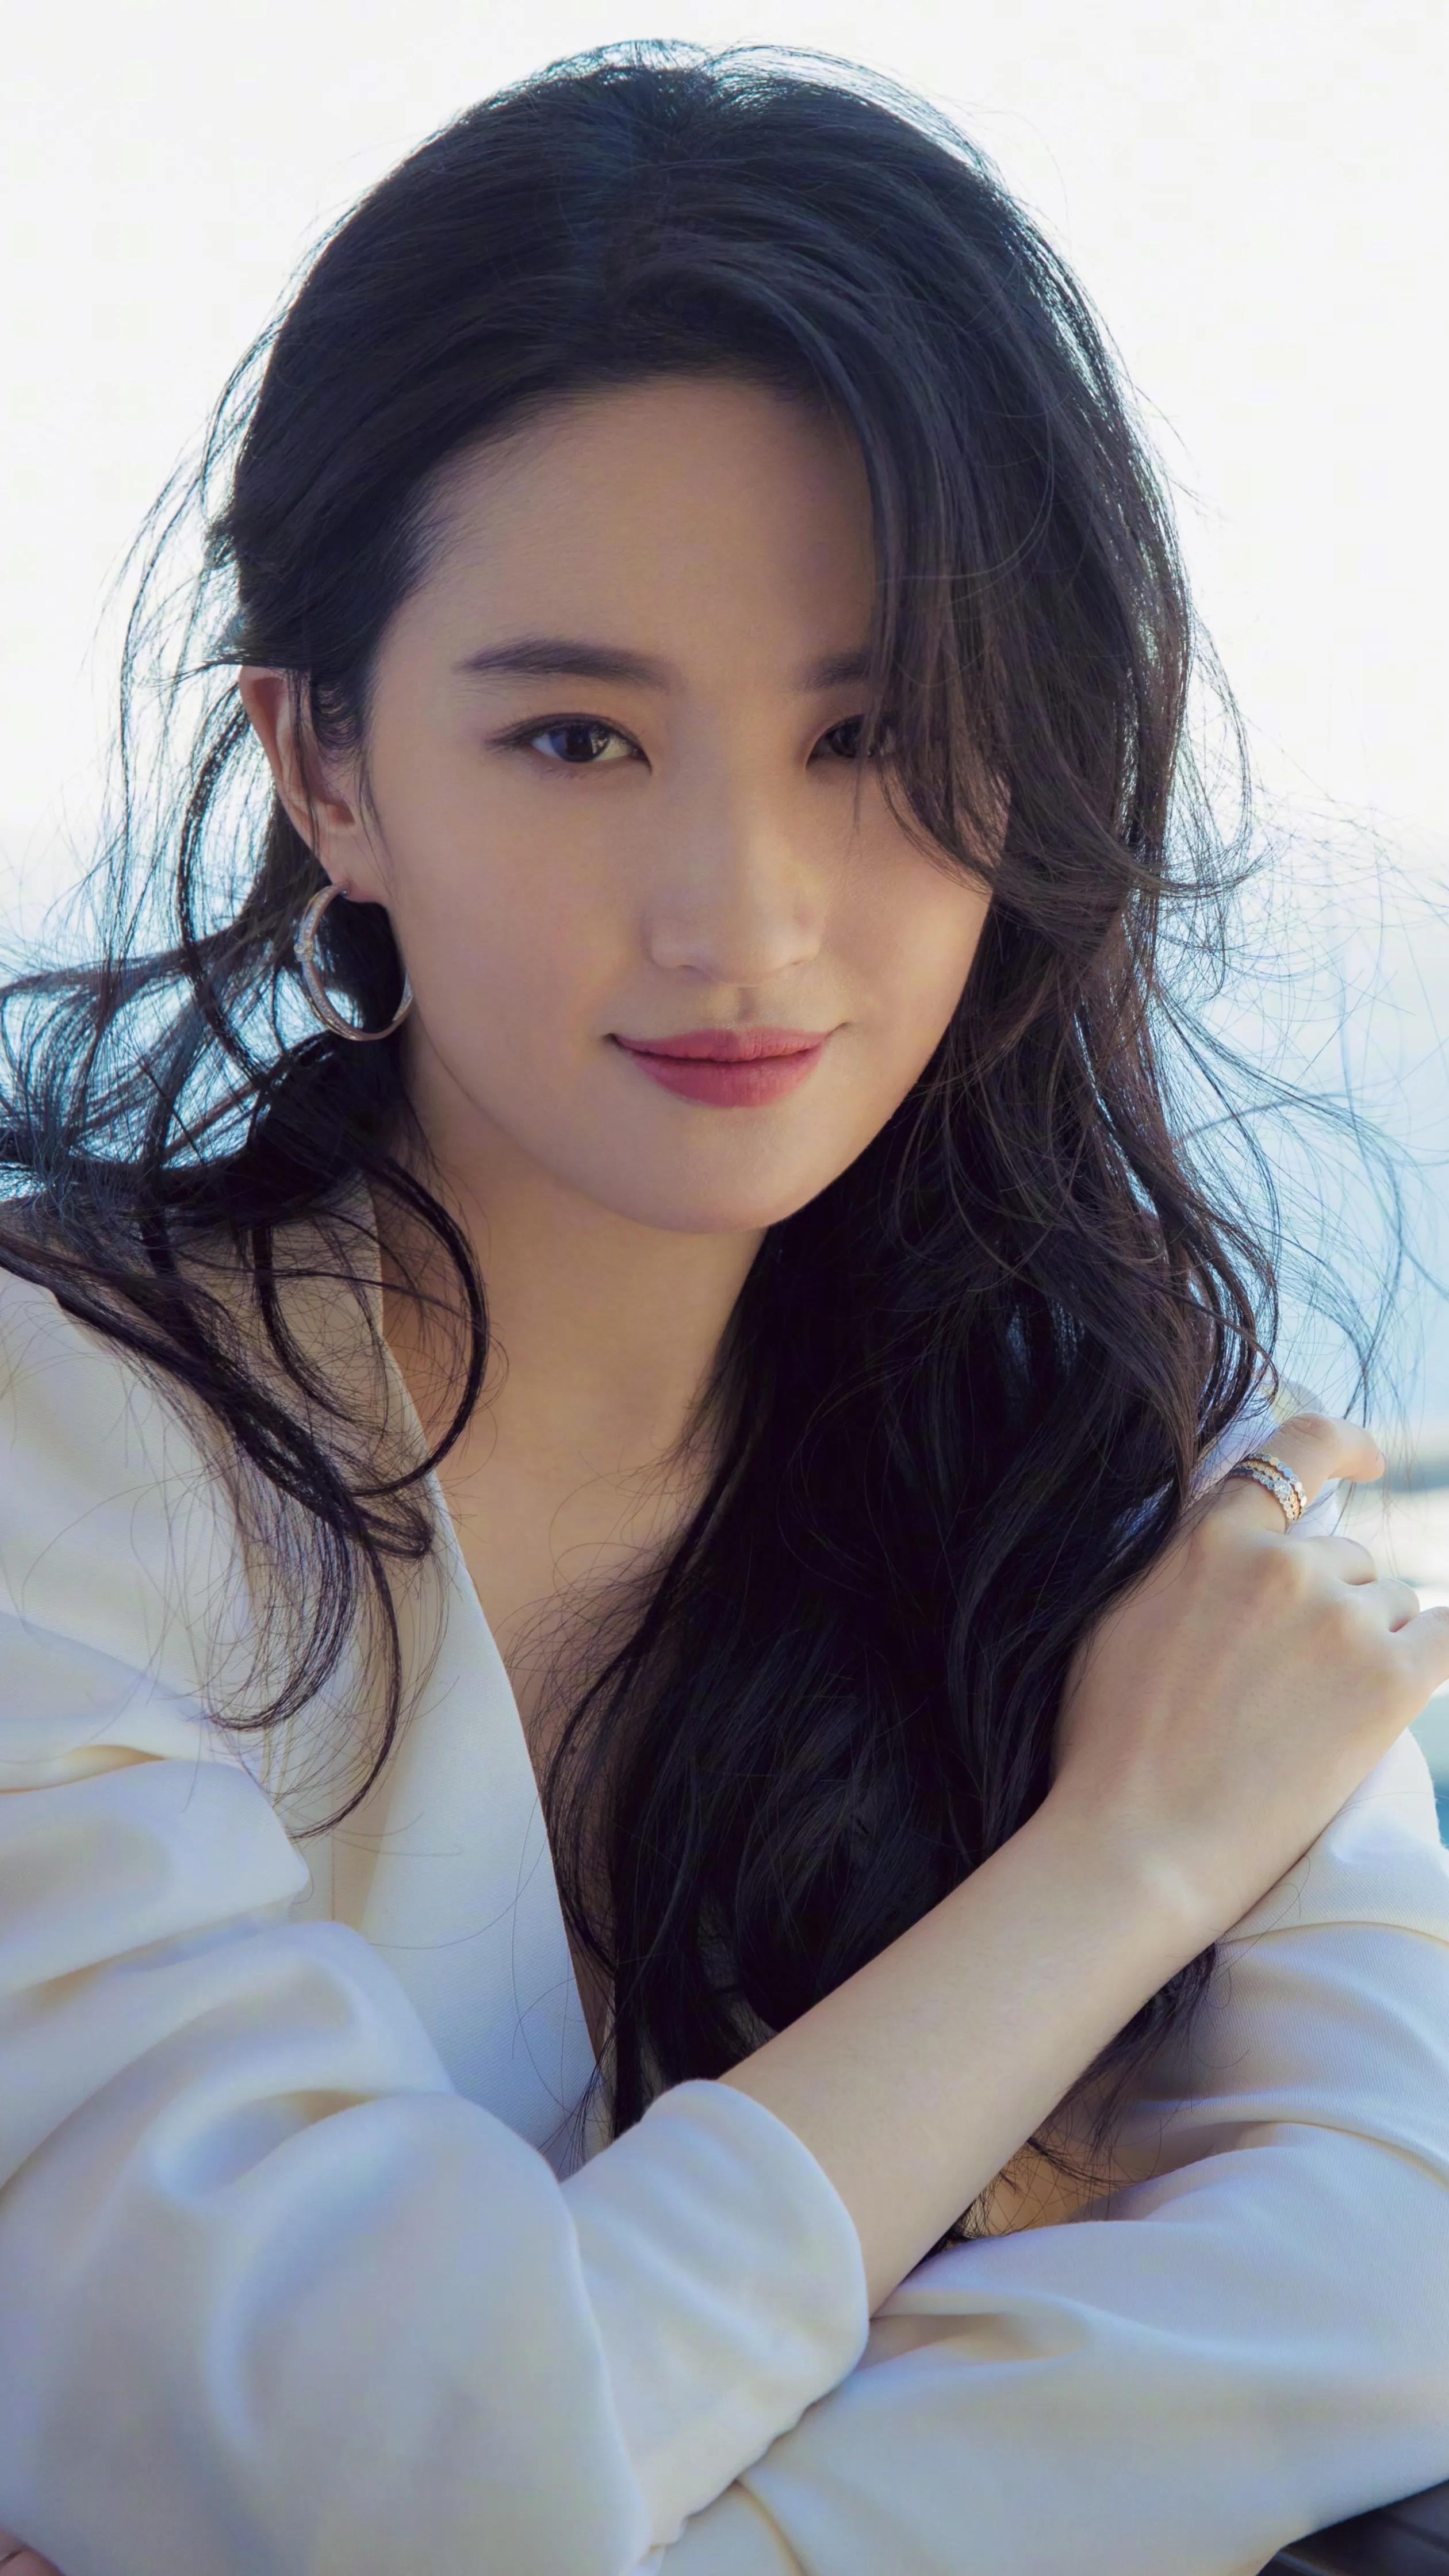 The most beautiful woman Liu Yifei - iMedia